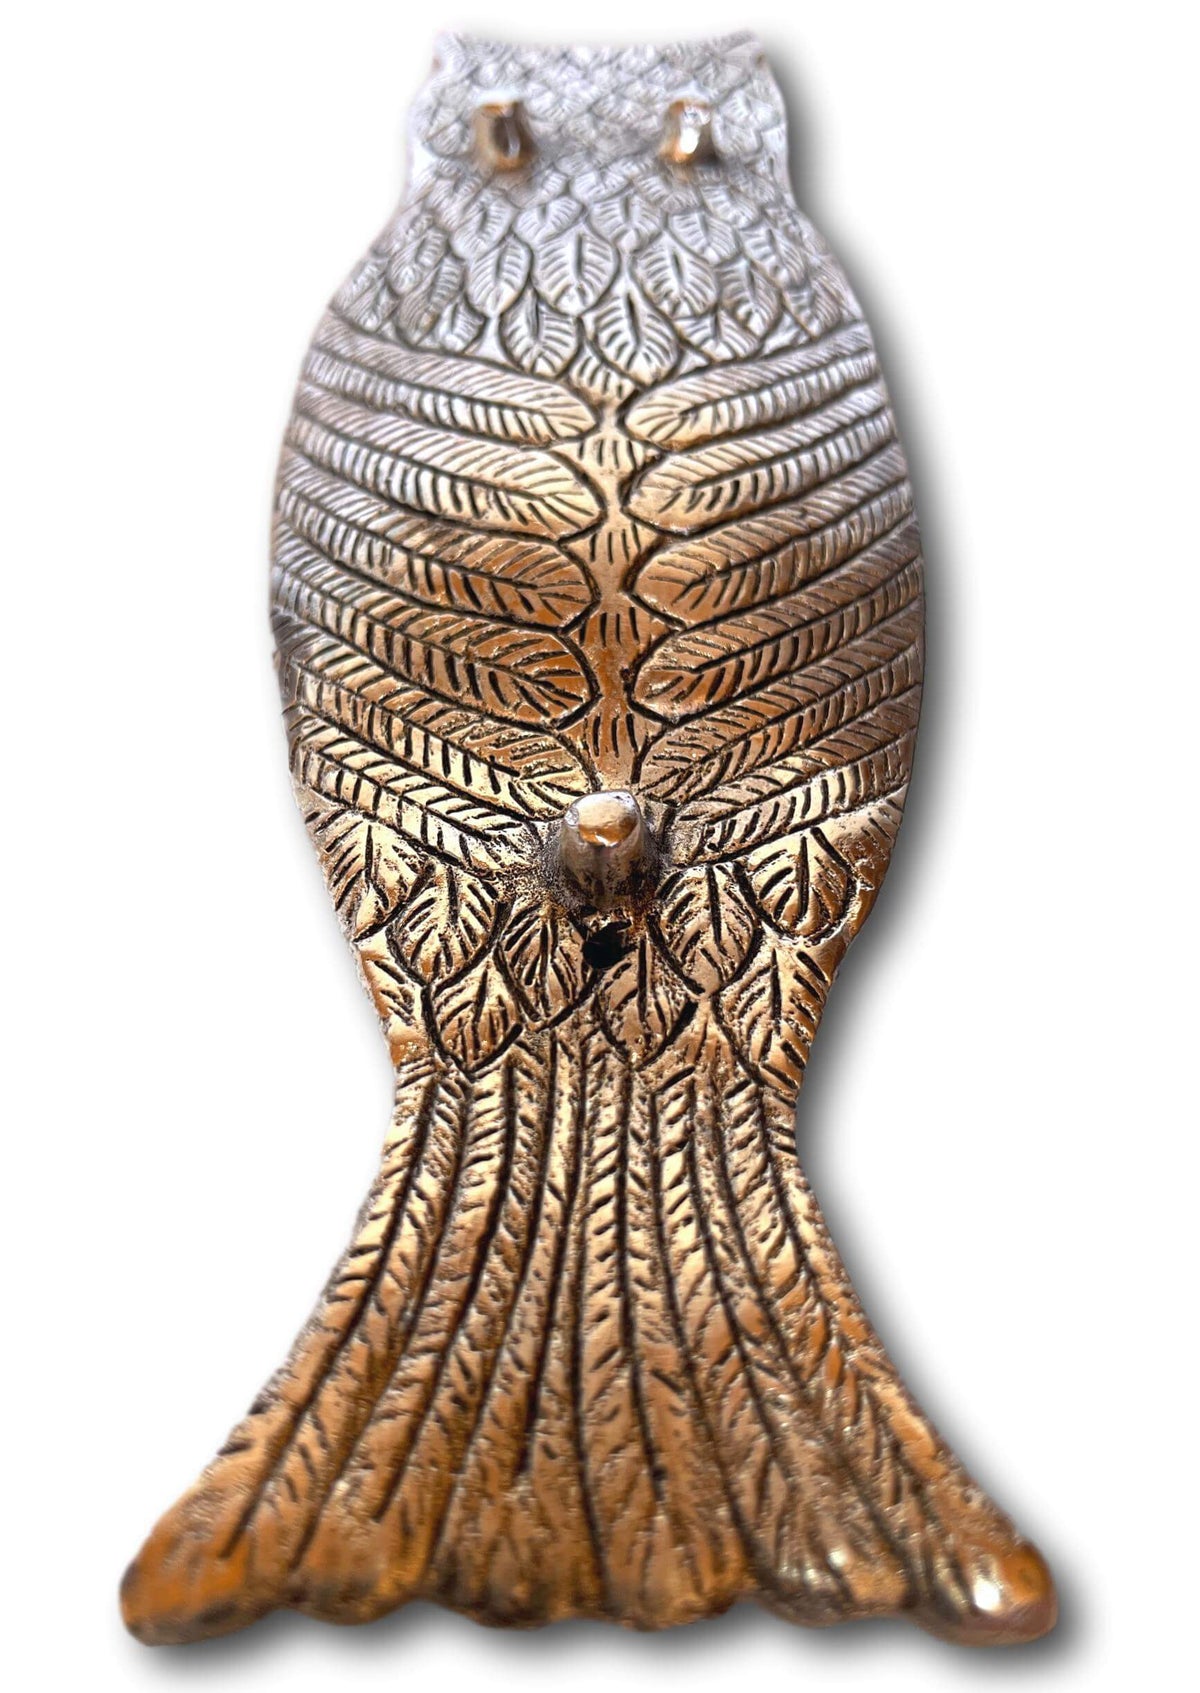 Wise Owl 🦉 Incense Burner - Handmade In India 🇮🇳